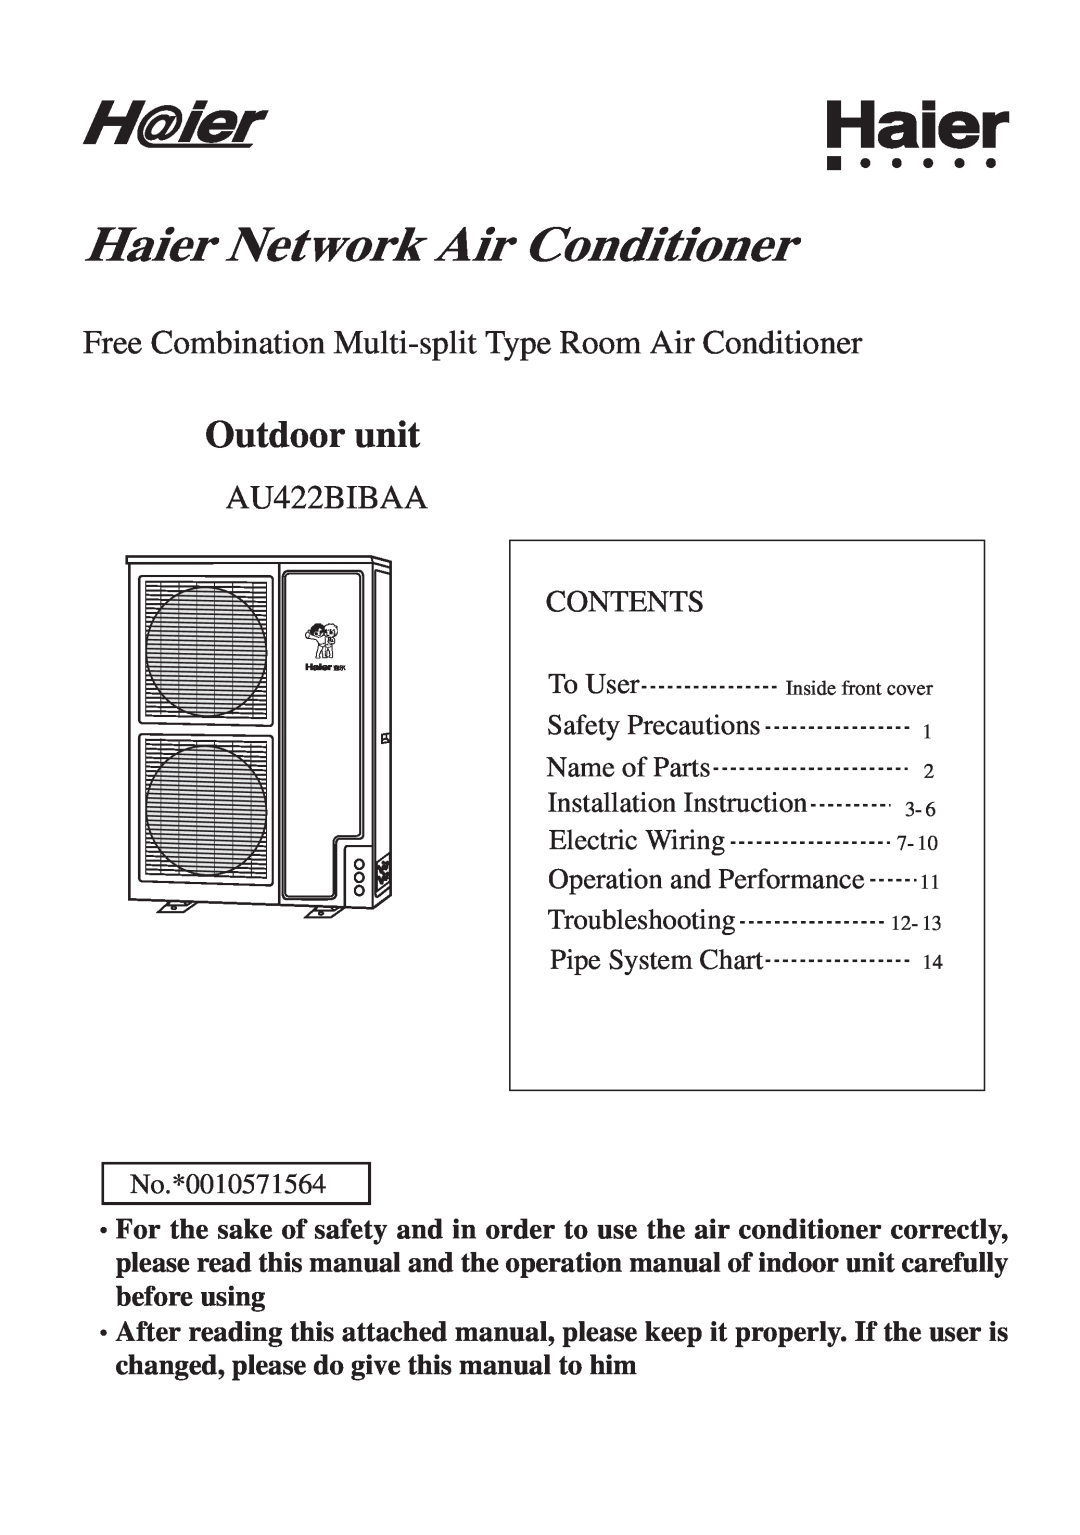 Haier 0010571564 operation manual Outdoor unit, Free Combination Multi-split Type Room Air Conditioner, AU422BIBAA 